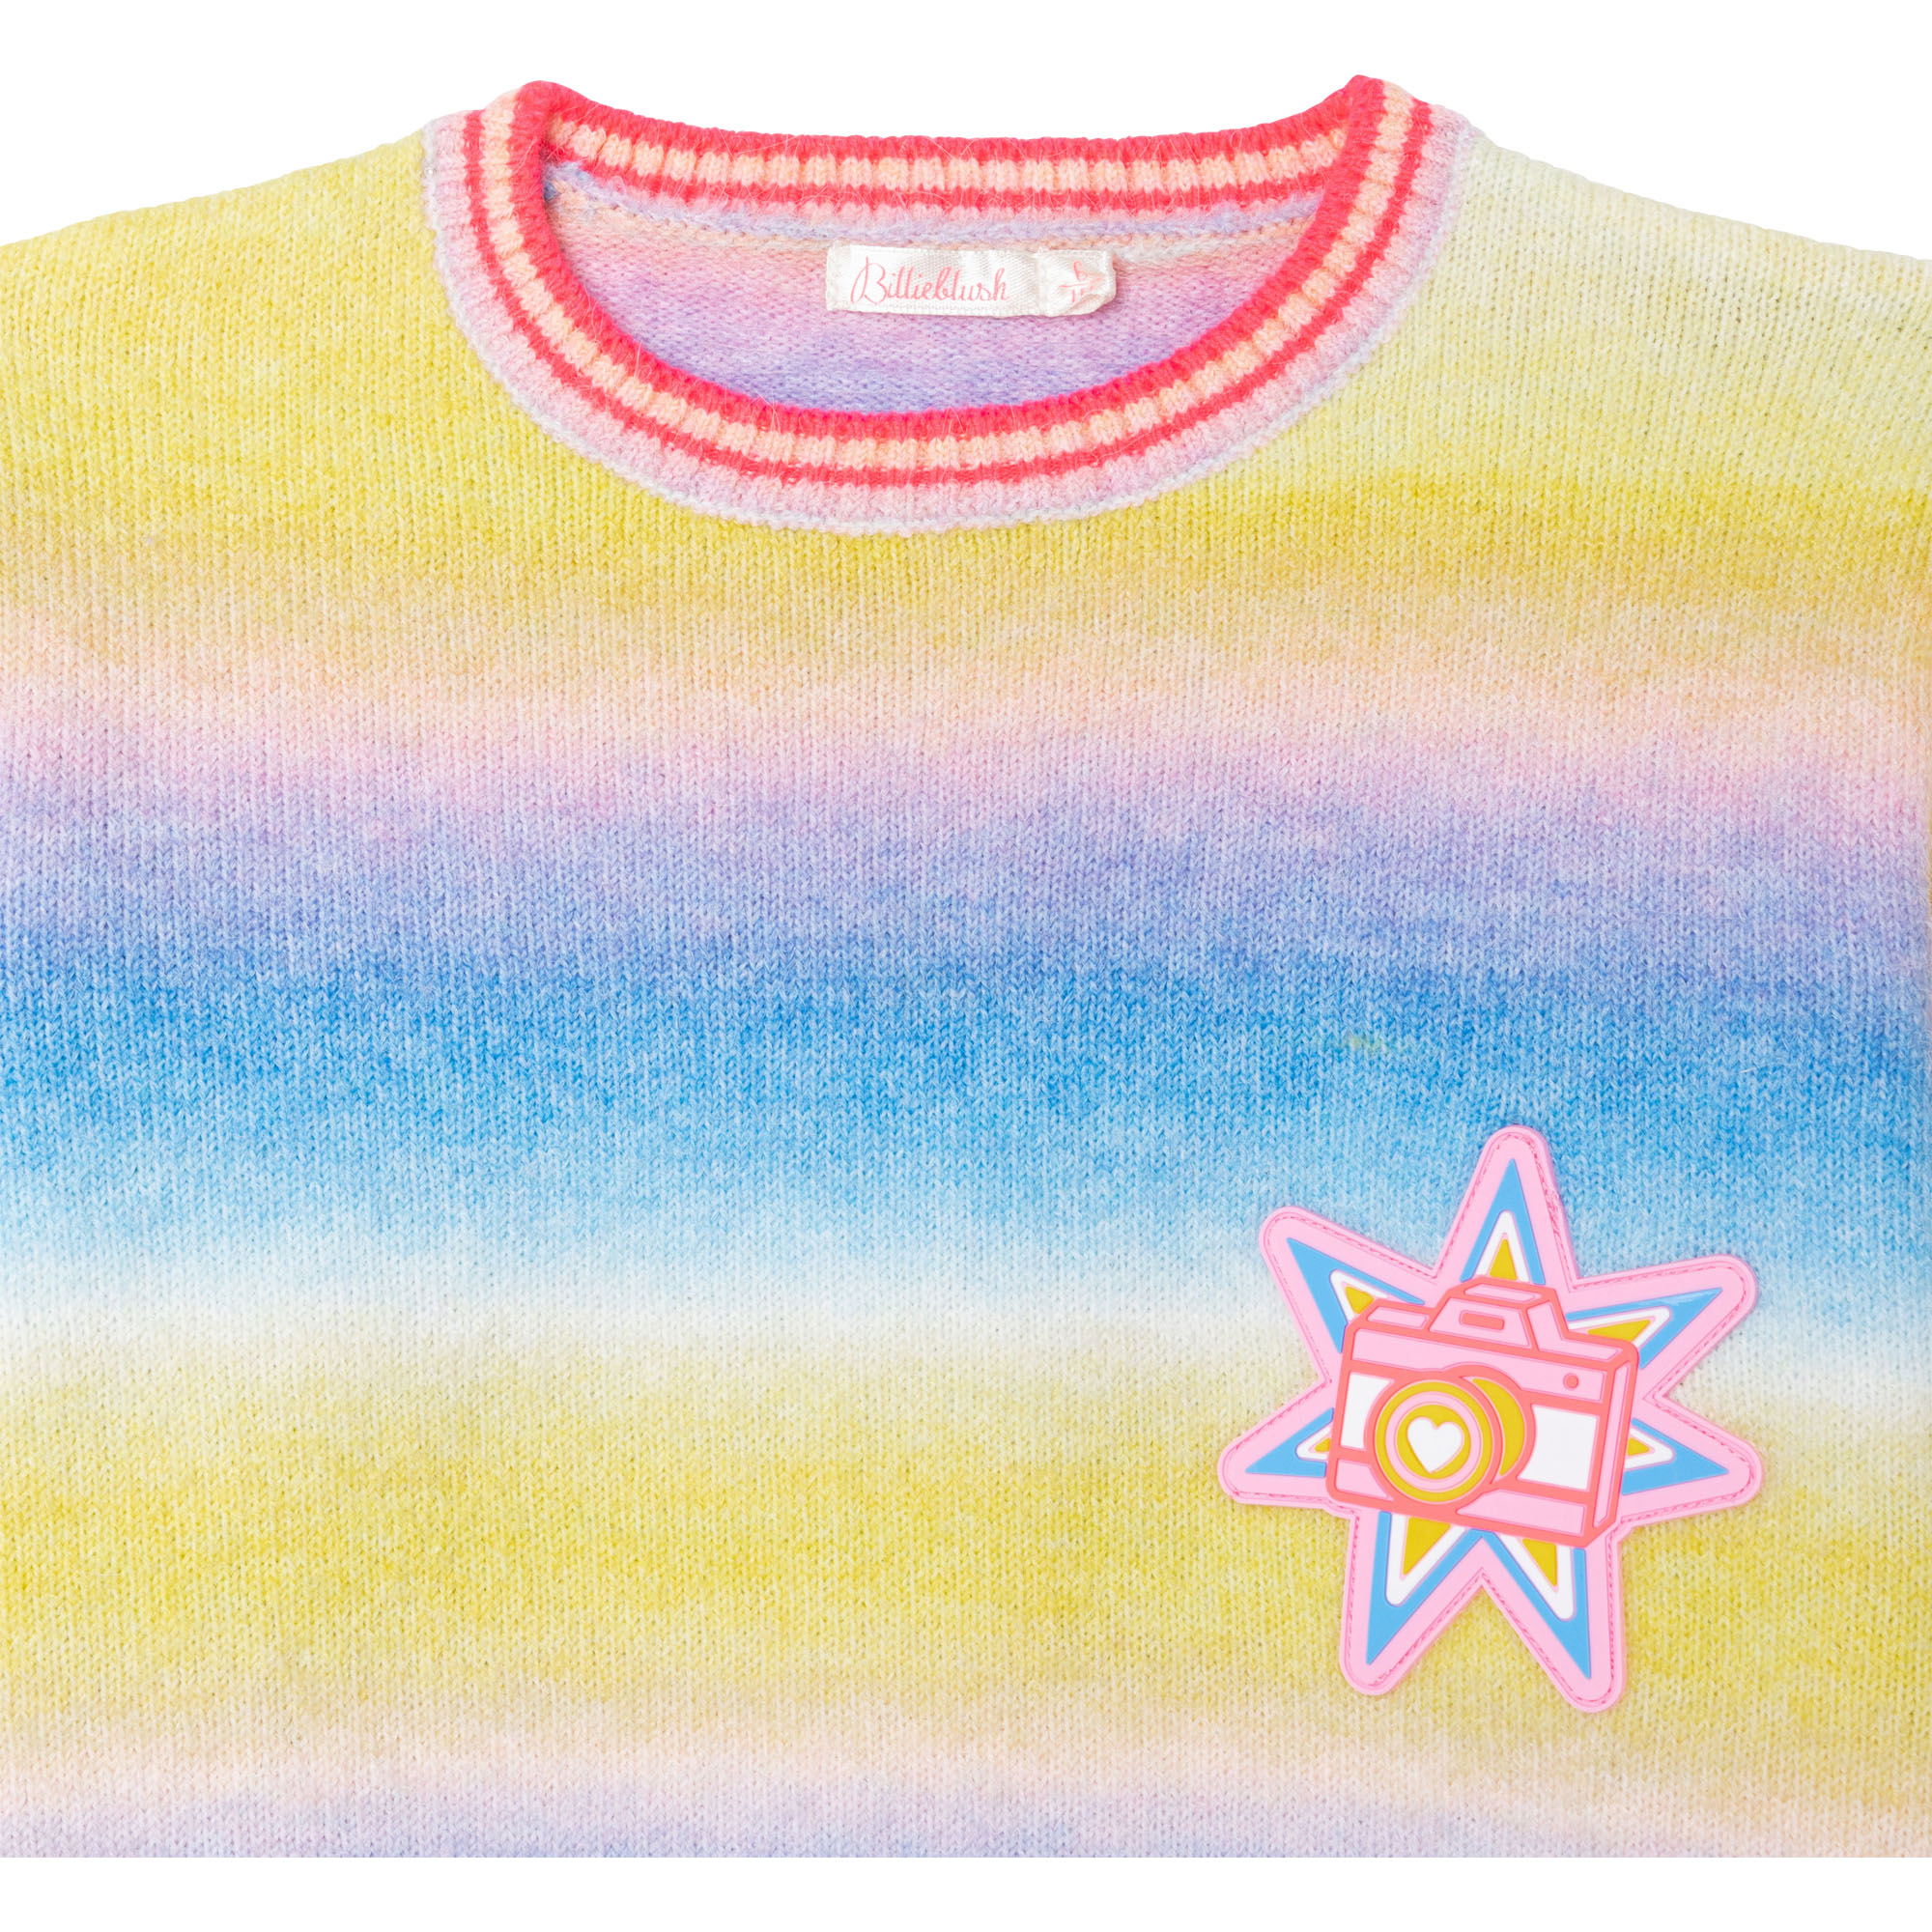 Tricot sweater BILLIEBLUSH for GIRL